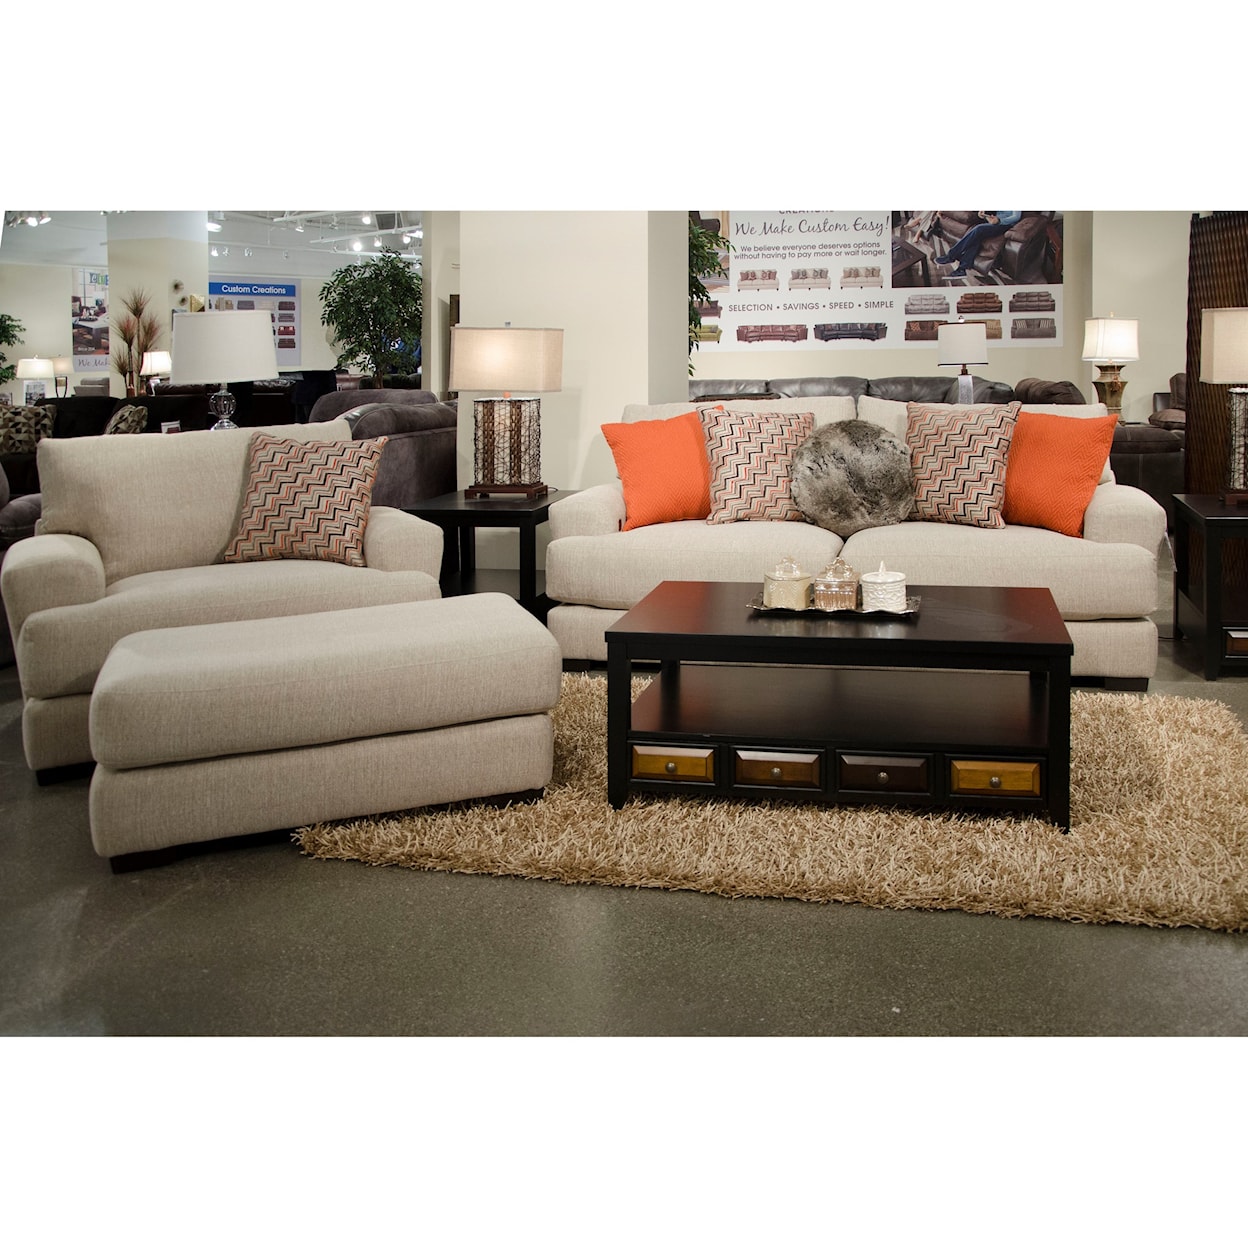 Carolina Furniture 4498 Ava Ottoman